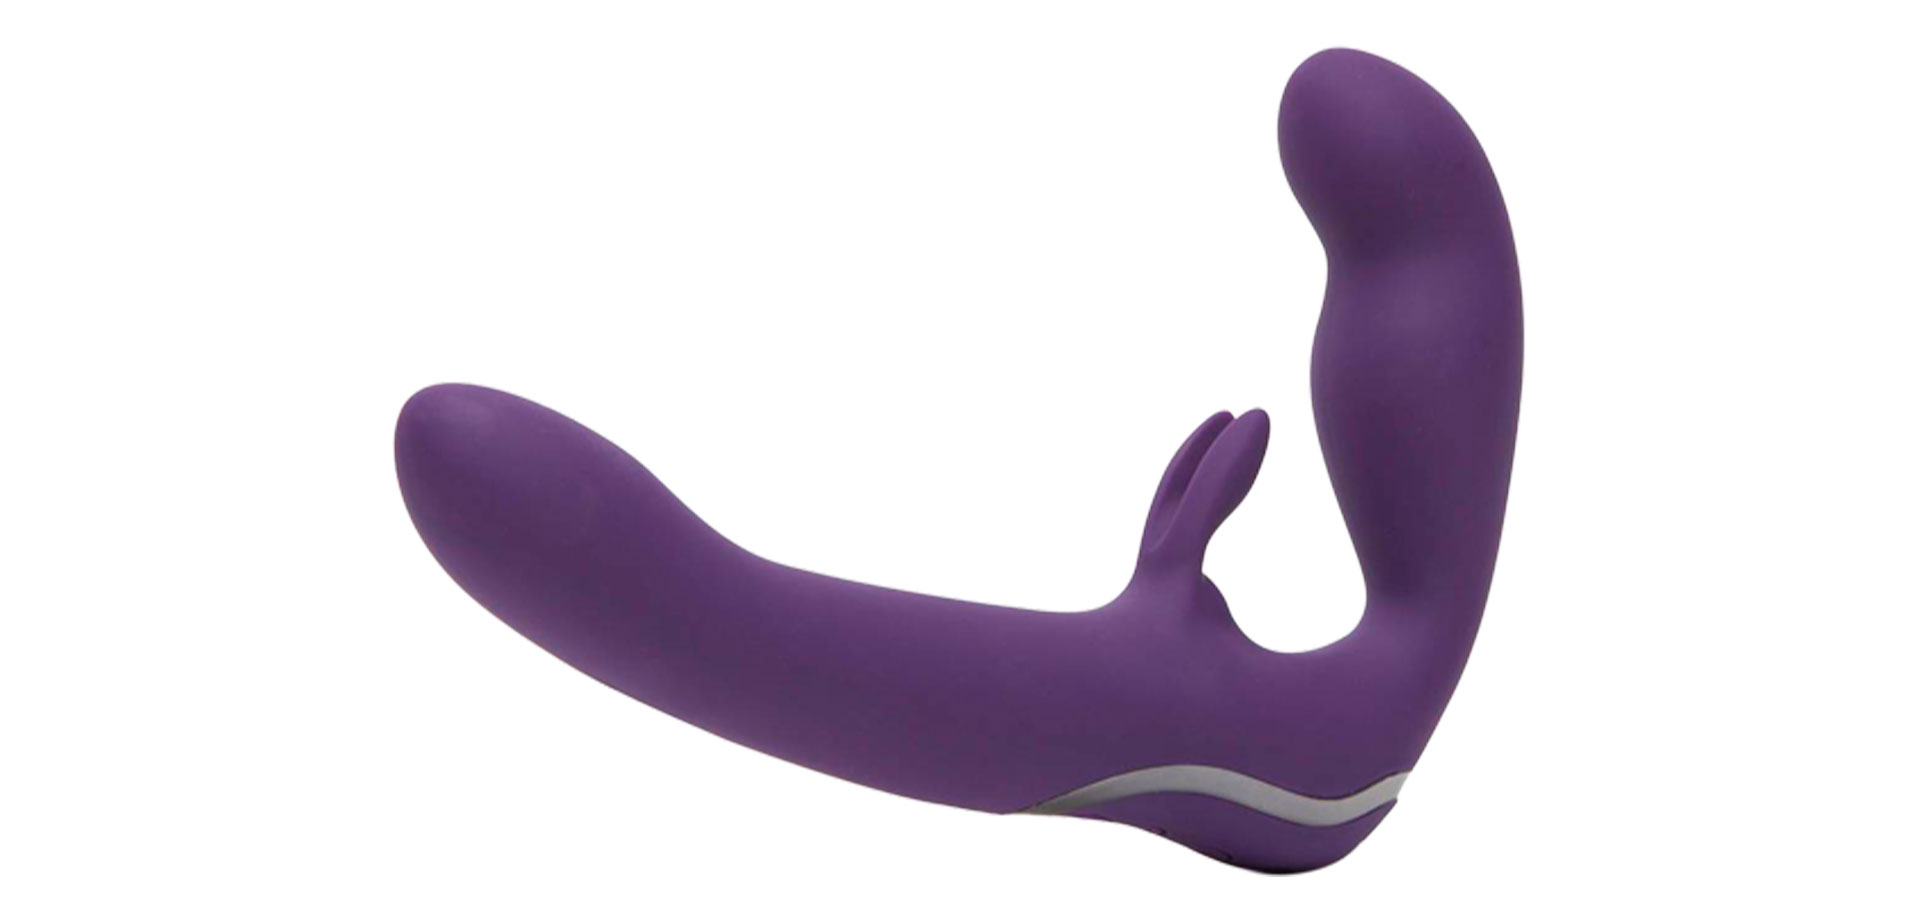 Best purple double penetration toy.